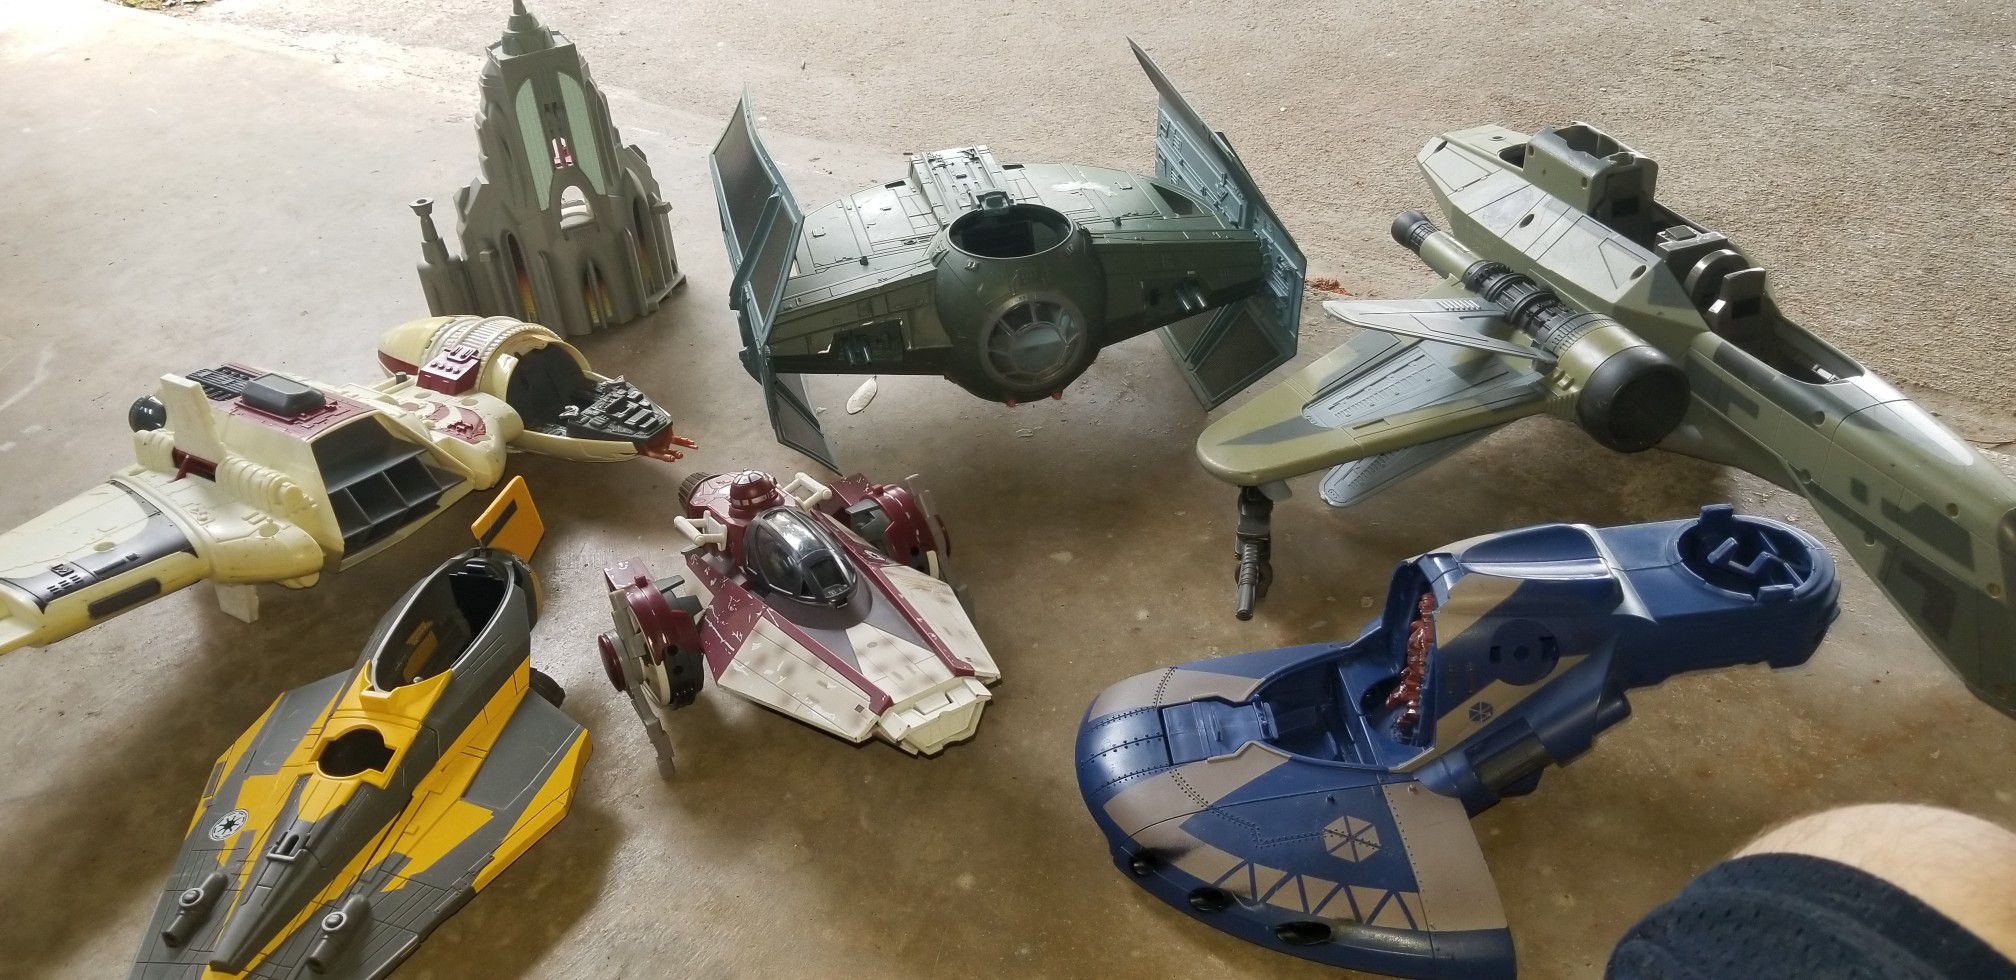 Star wars vehicles